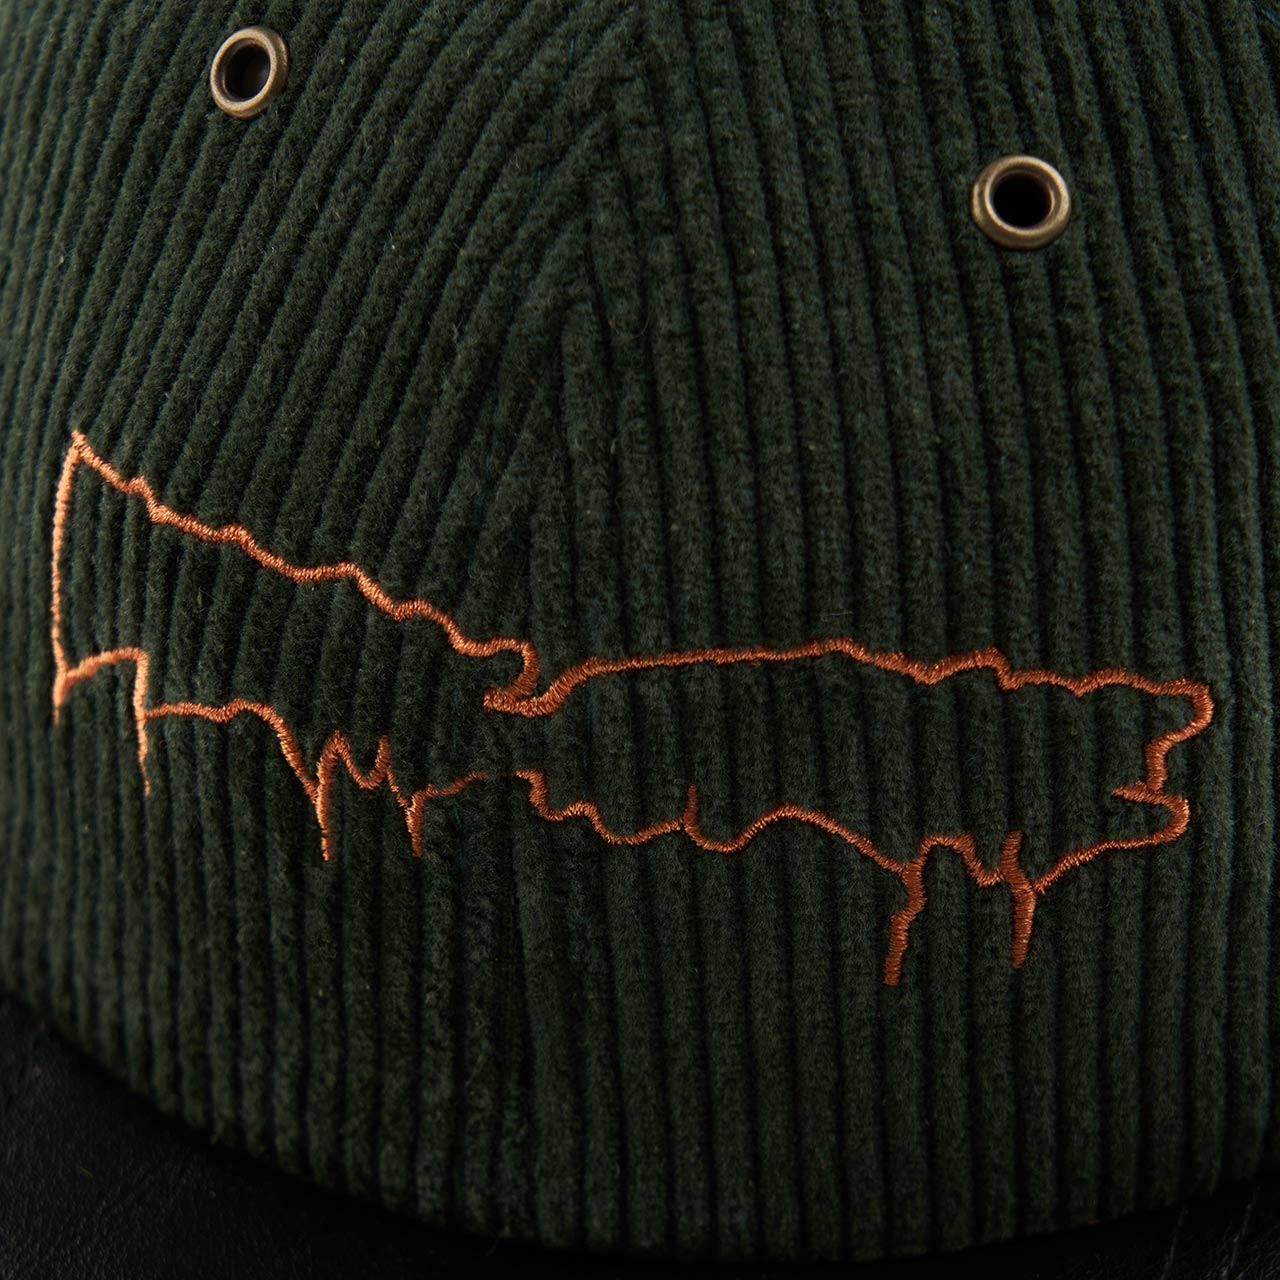 fucking awesome fucking awesome drip corduroy strapback cap (green) P709194